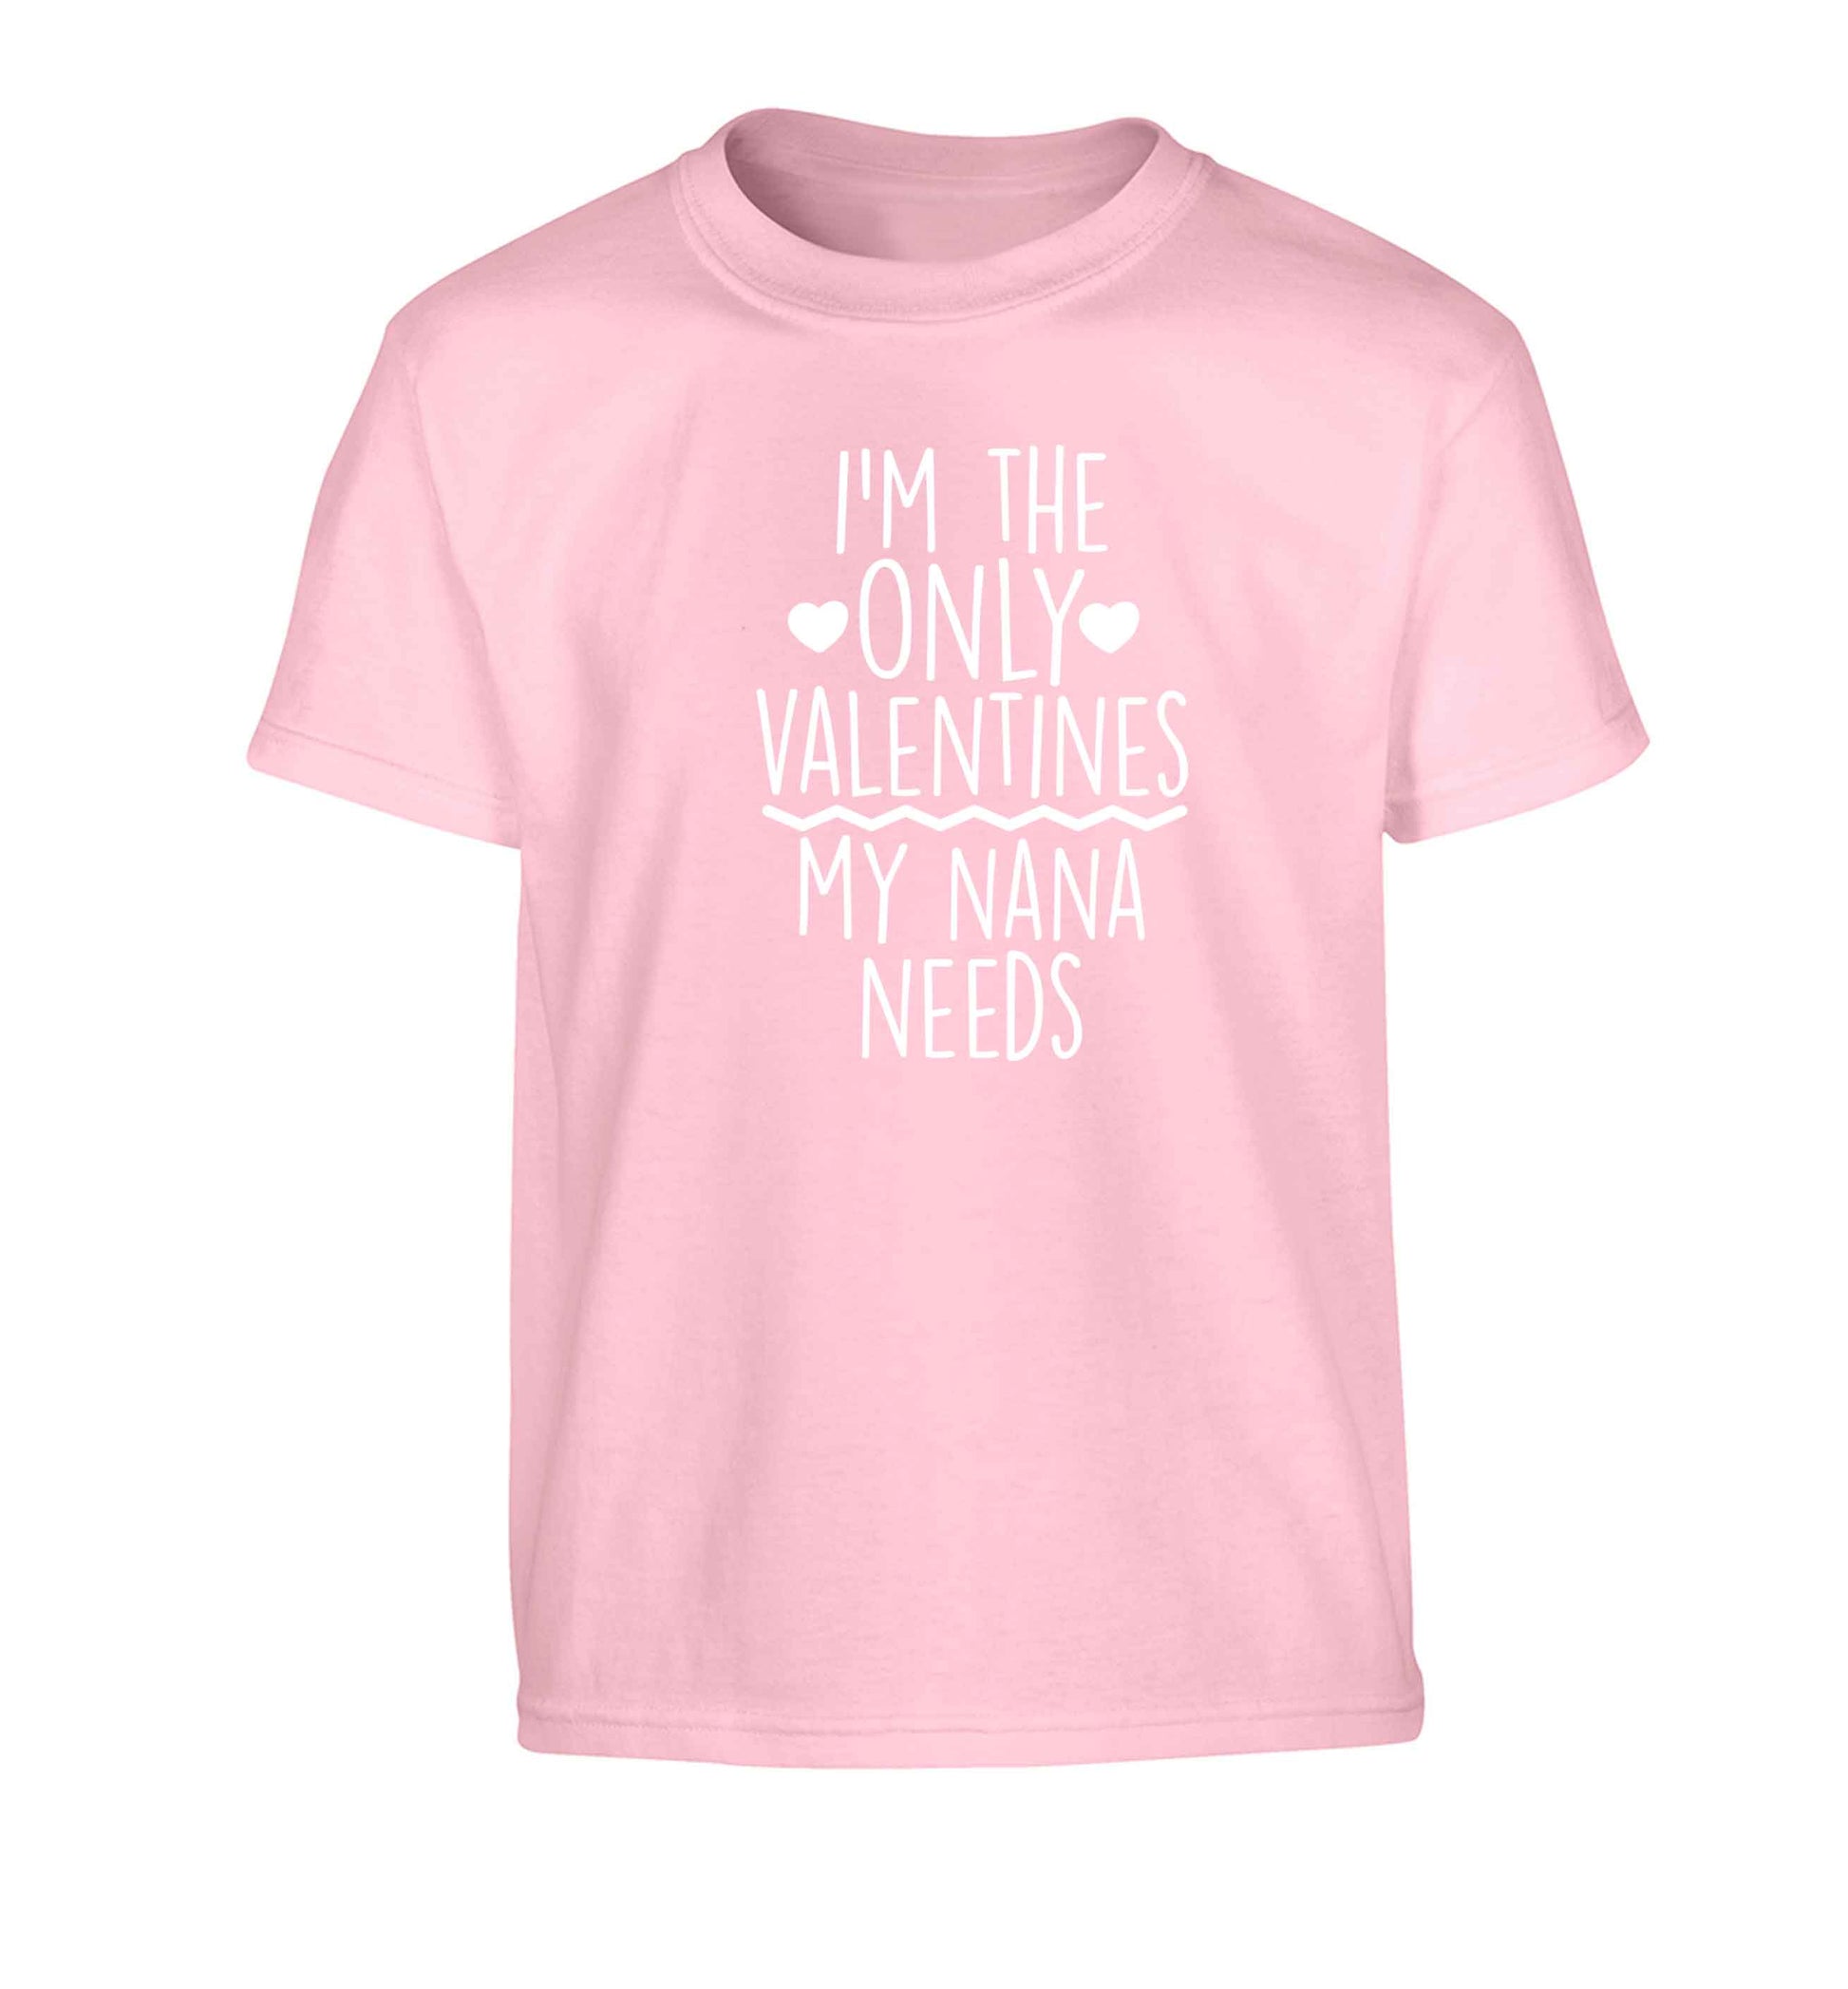 I'm the only valentines my nana needs Children's light pink Tshirt 12-13 Years